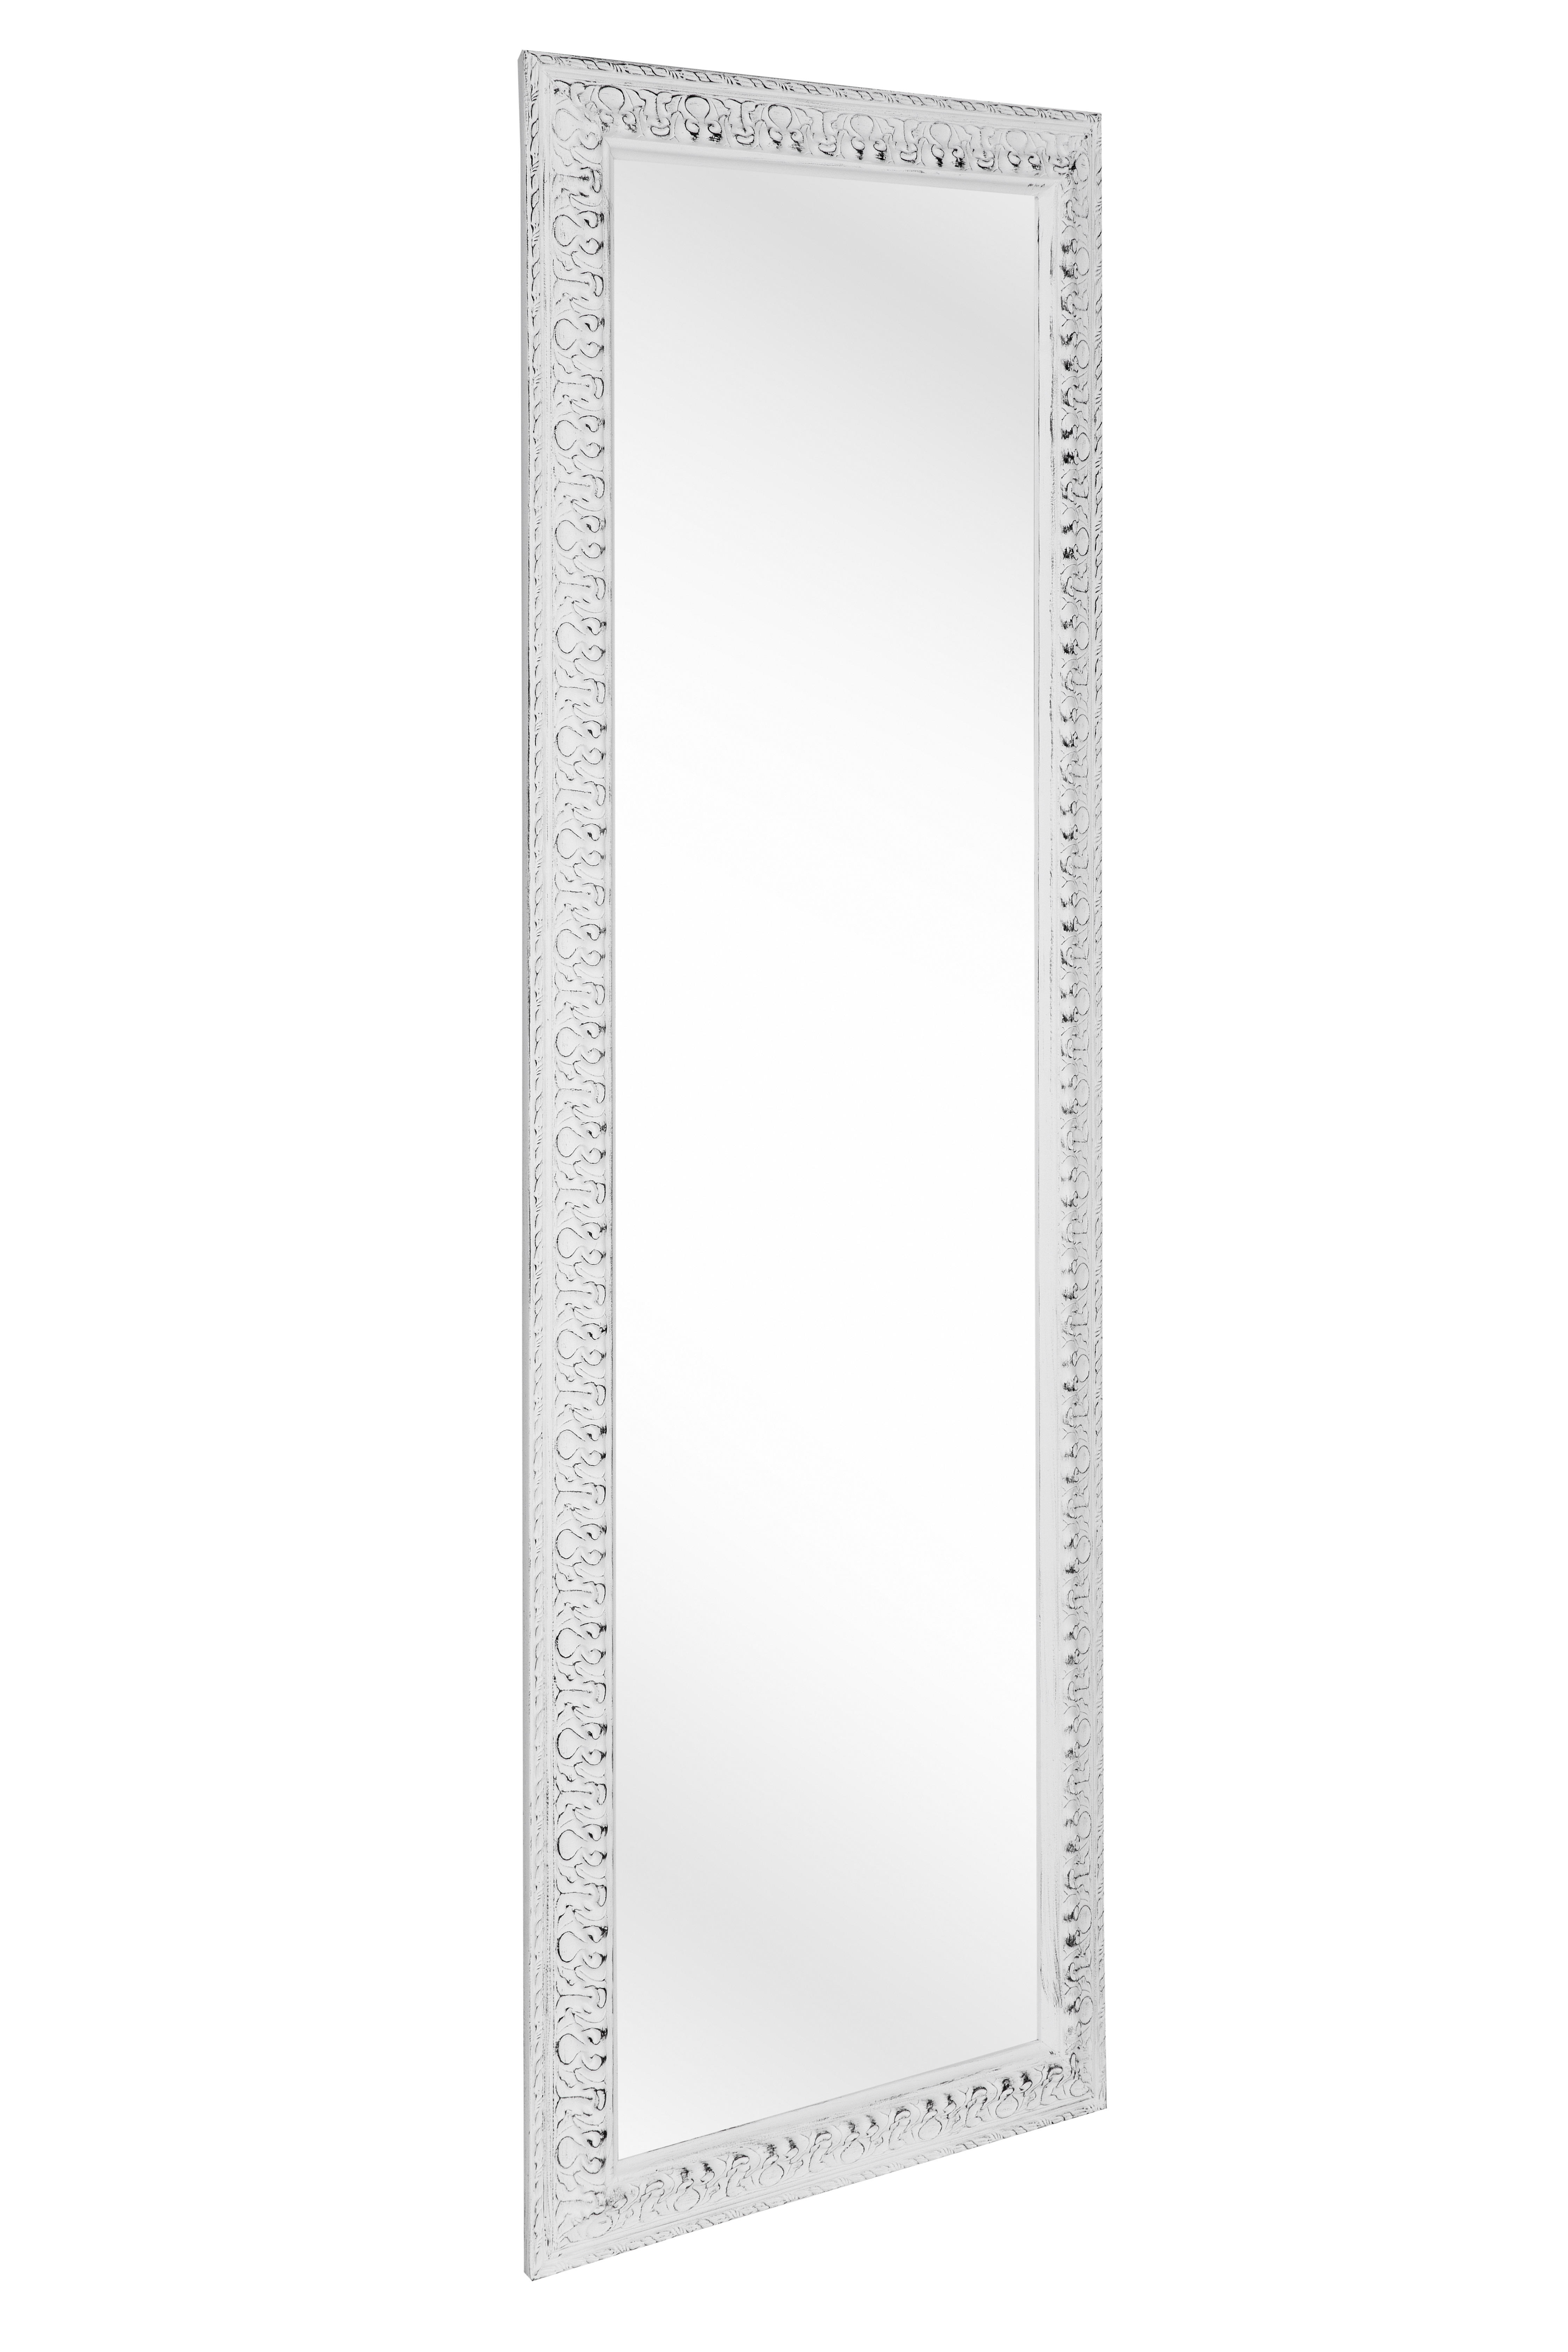 WANDSPIEGEL 50/150/3 cm  - weiss, Lifestyle, Glas/Holz (50/150/3cm) - Carryhome